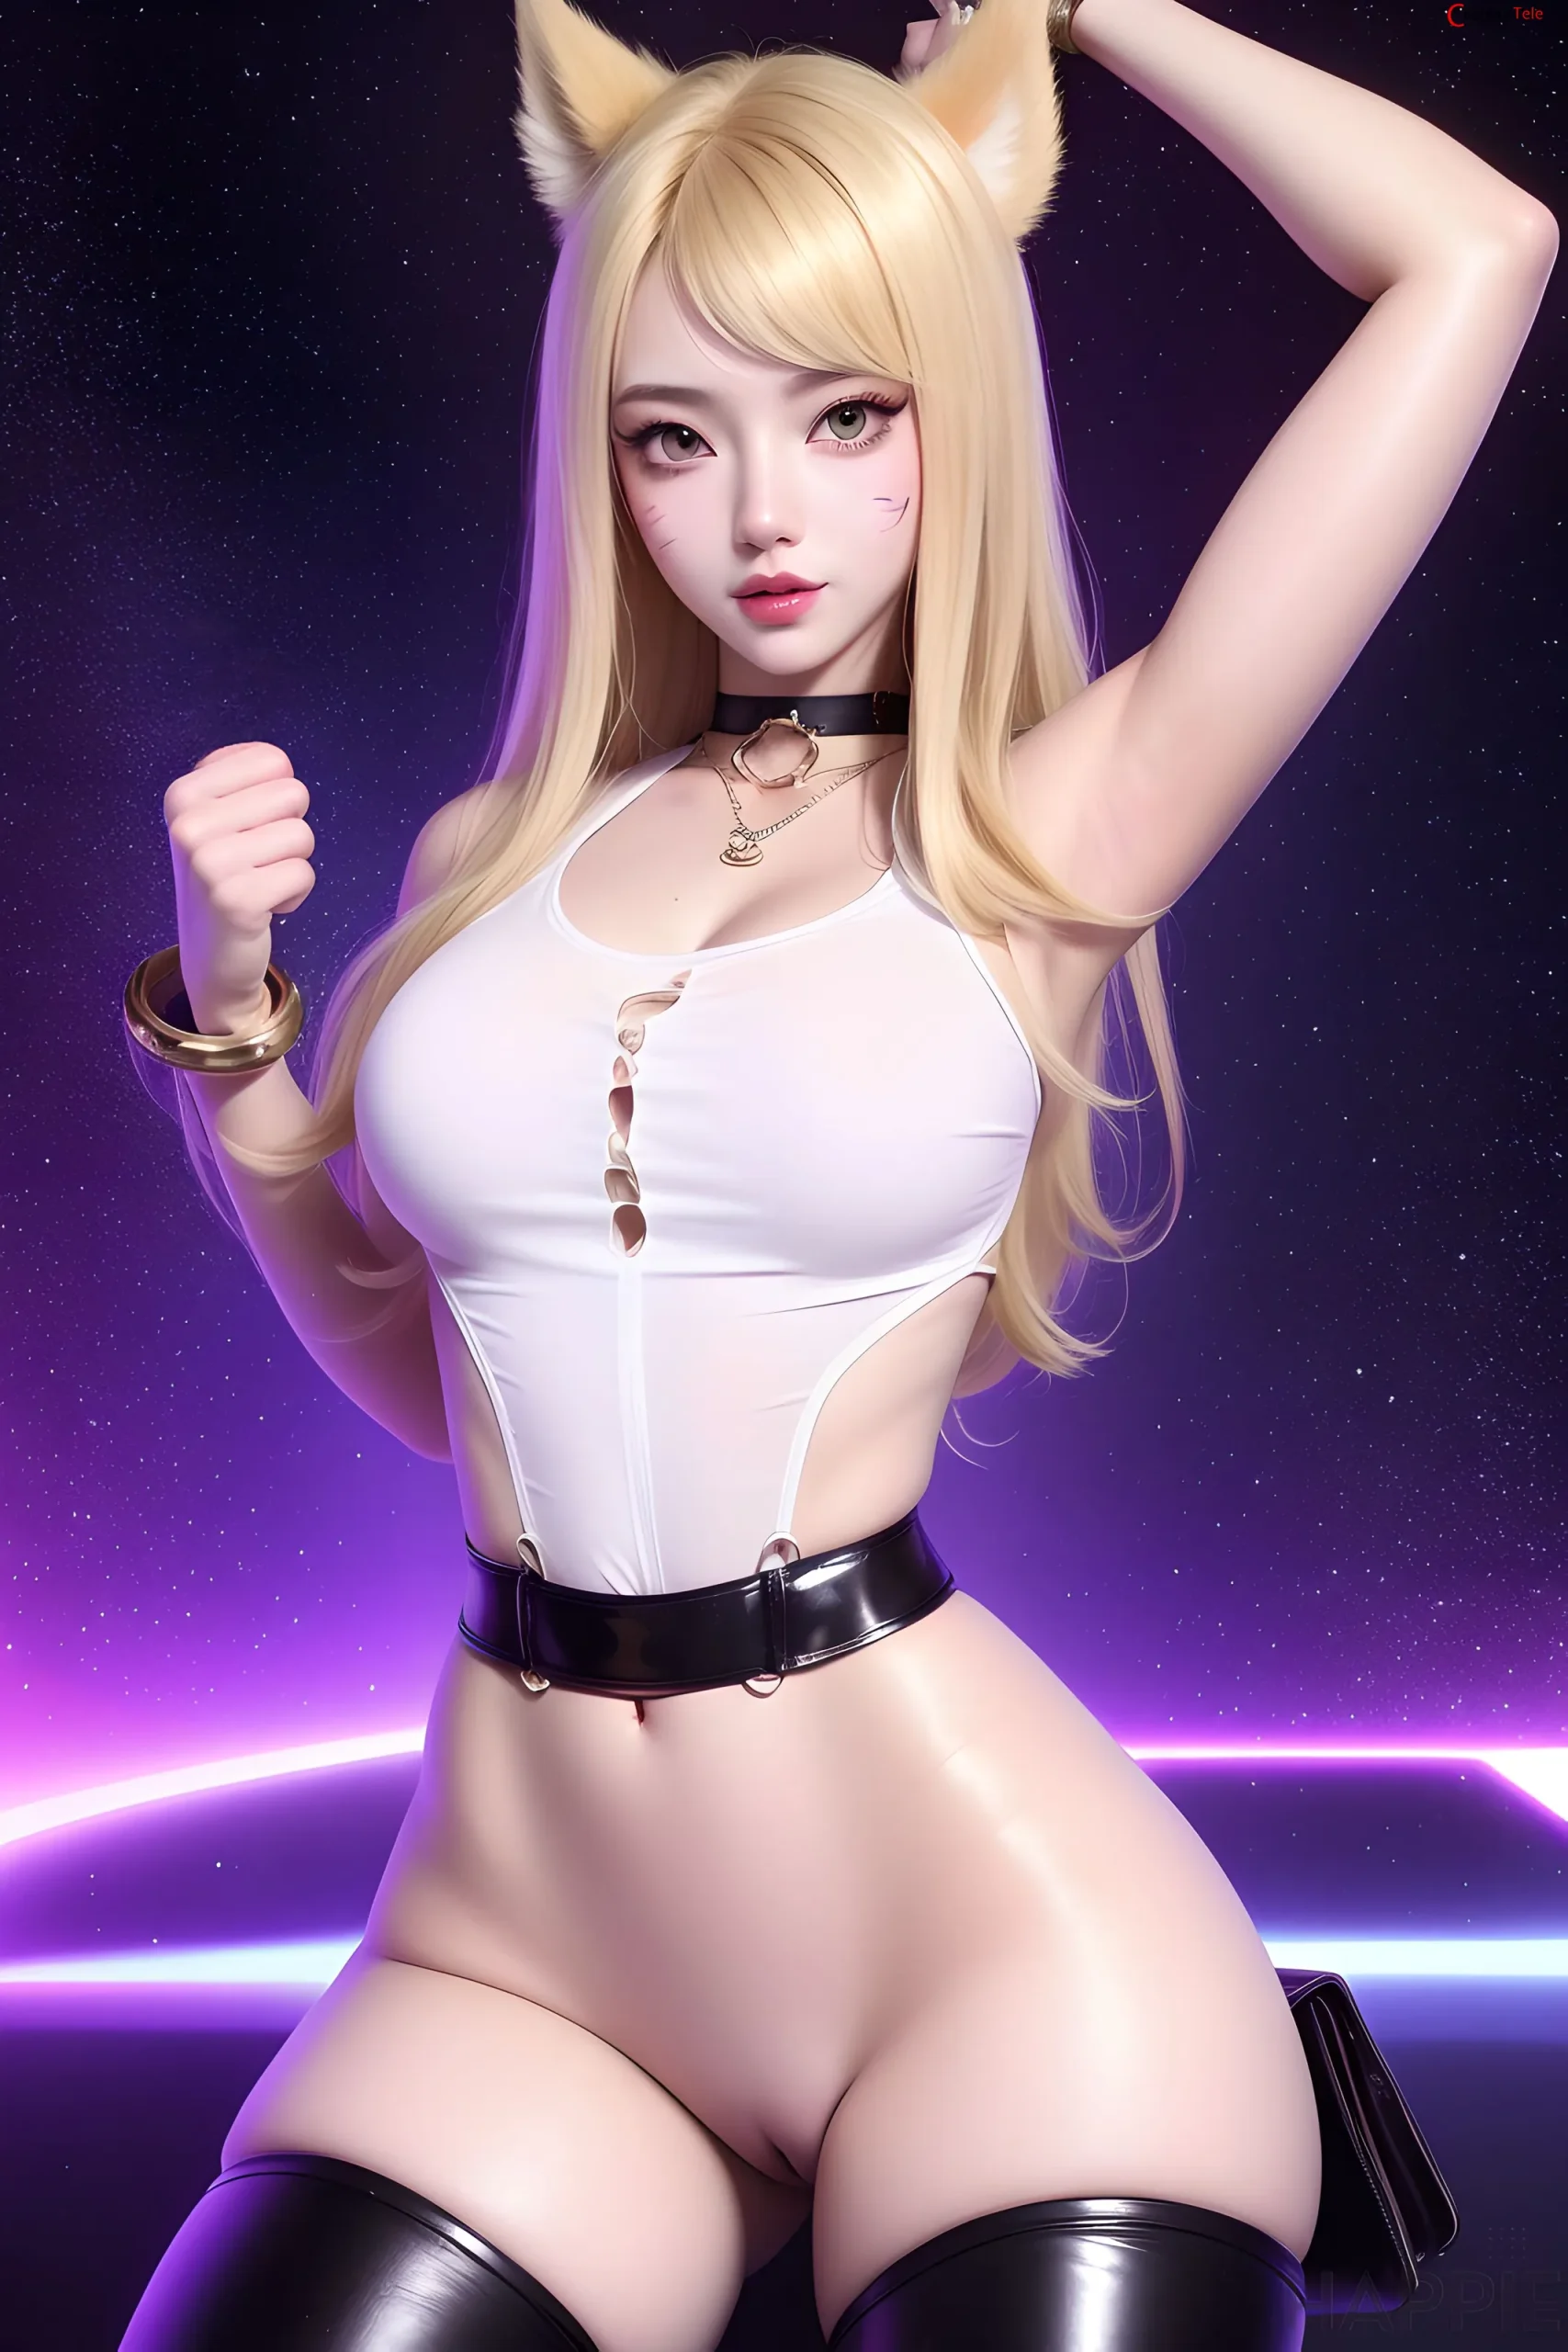 AI Art – Anime Girl 23 KDA Ahri League of Legends 19 result scaled.webp.webp